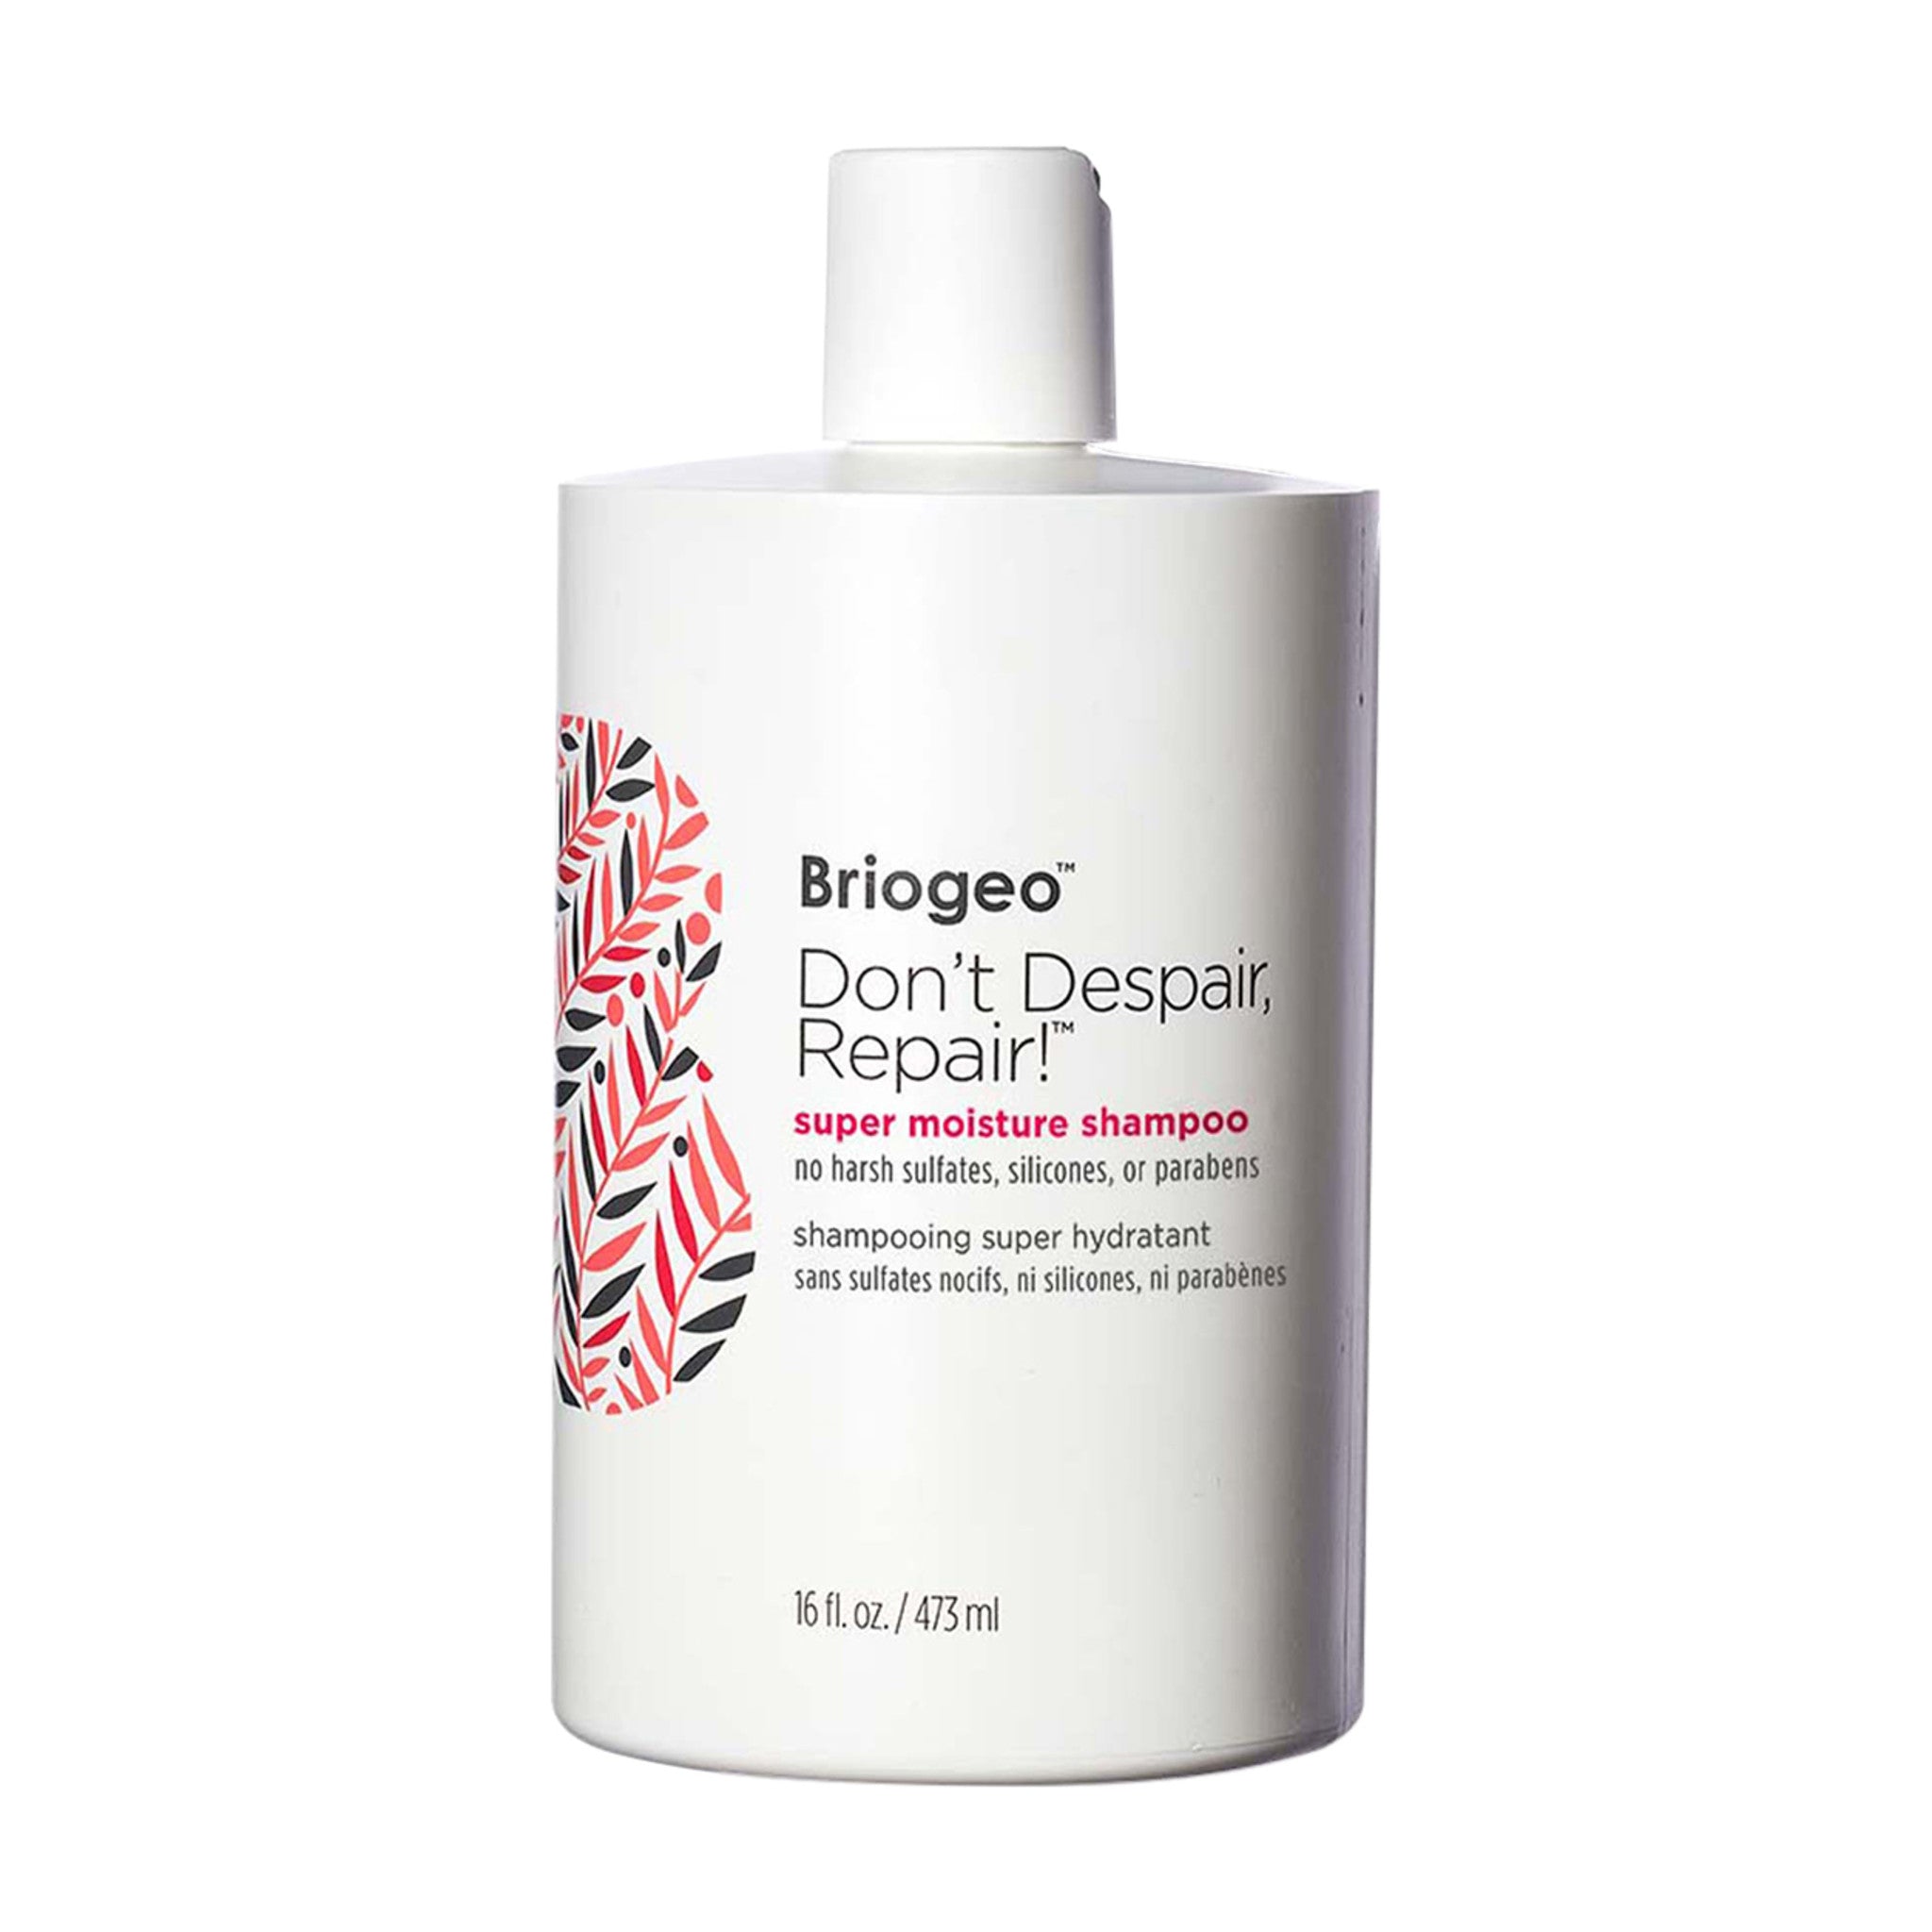 Briogeo Don't Despair, Repair! Super Moisture Shampoo Size variant: 16 fl oz main image.